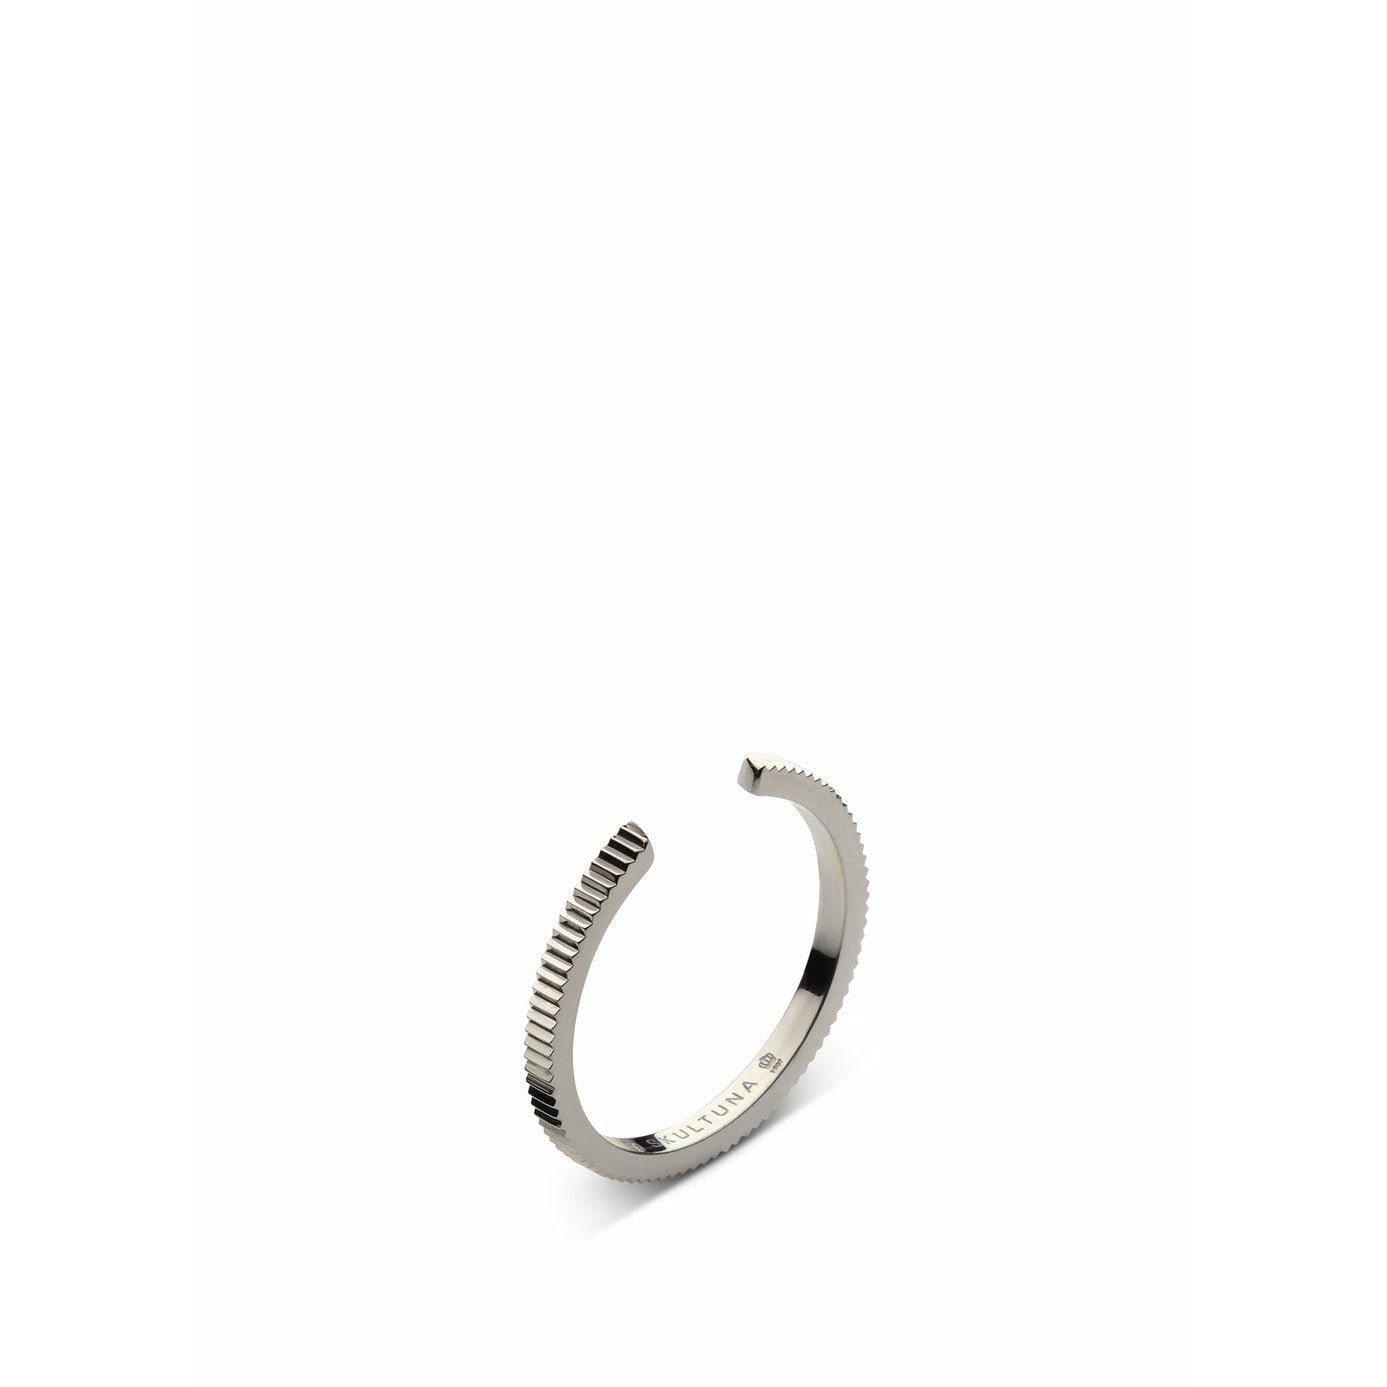 Skultuna gerippter dünner Ring kleiner polierter Stahl Ø1,6 cm